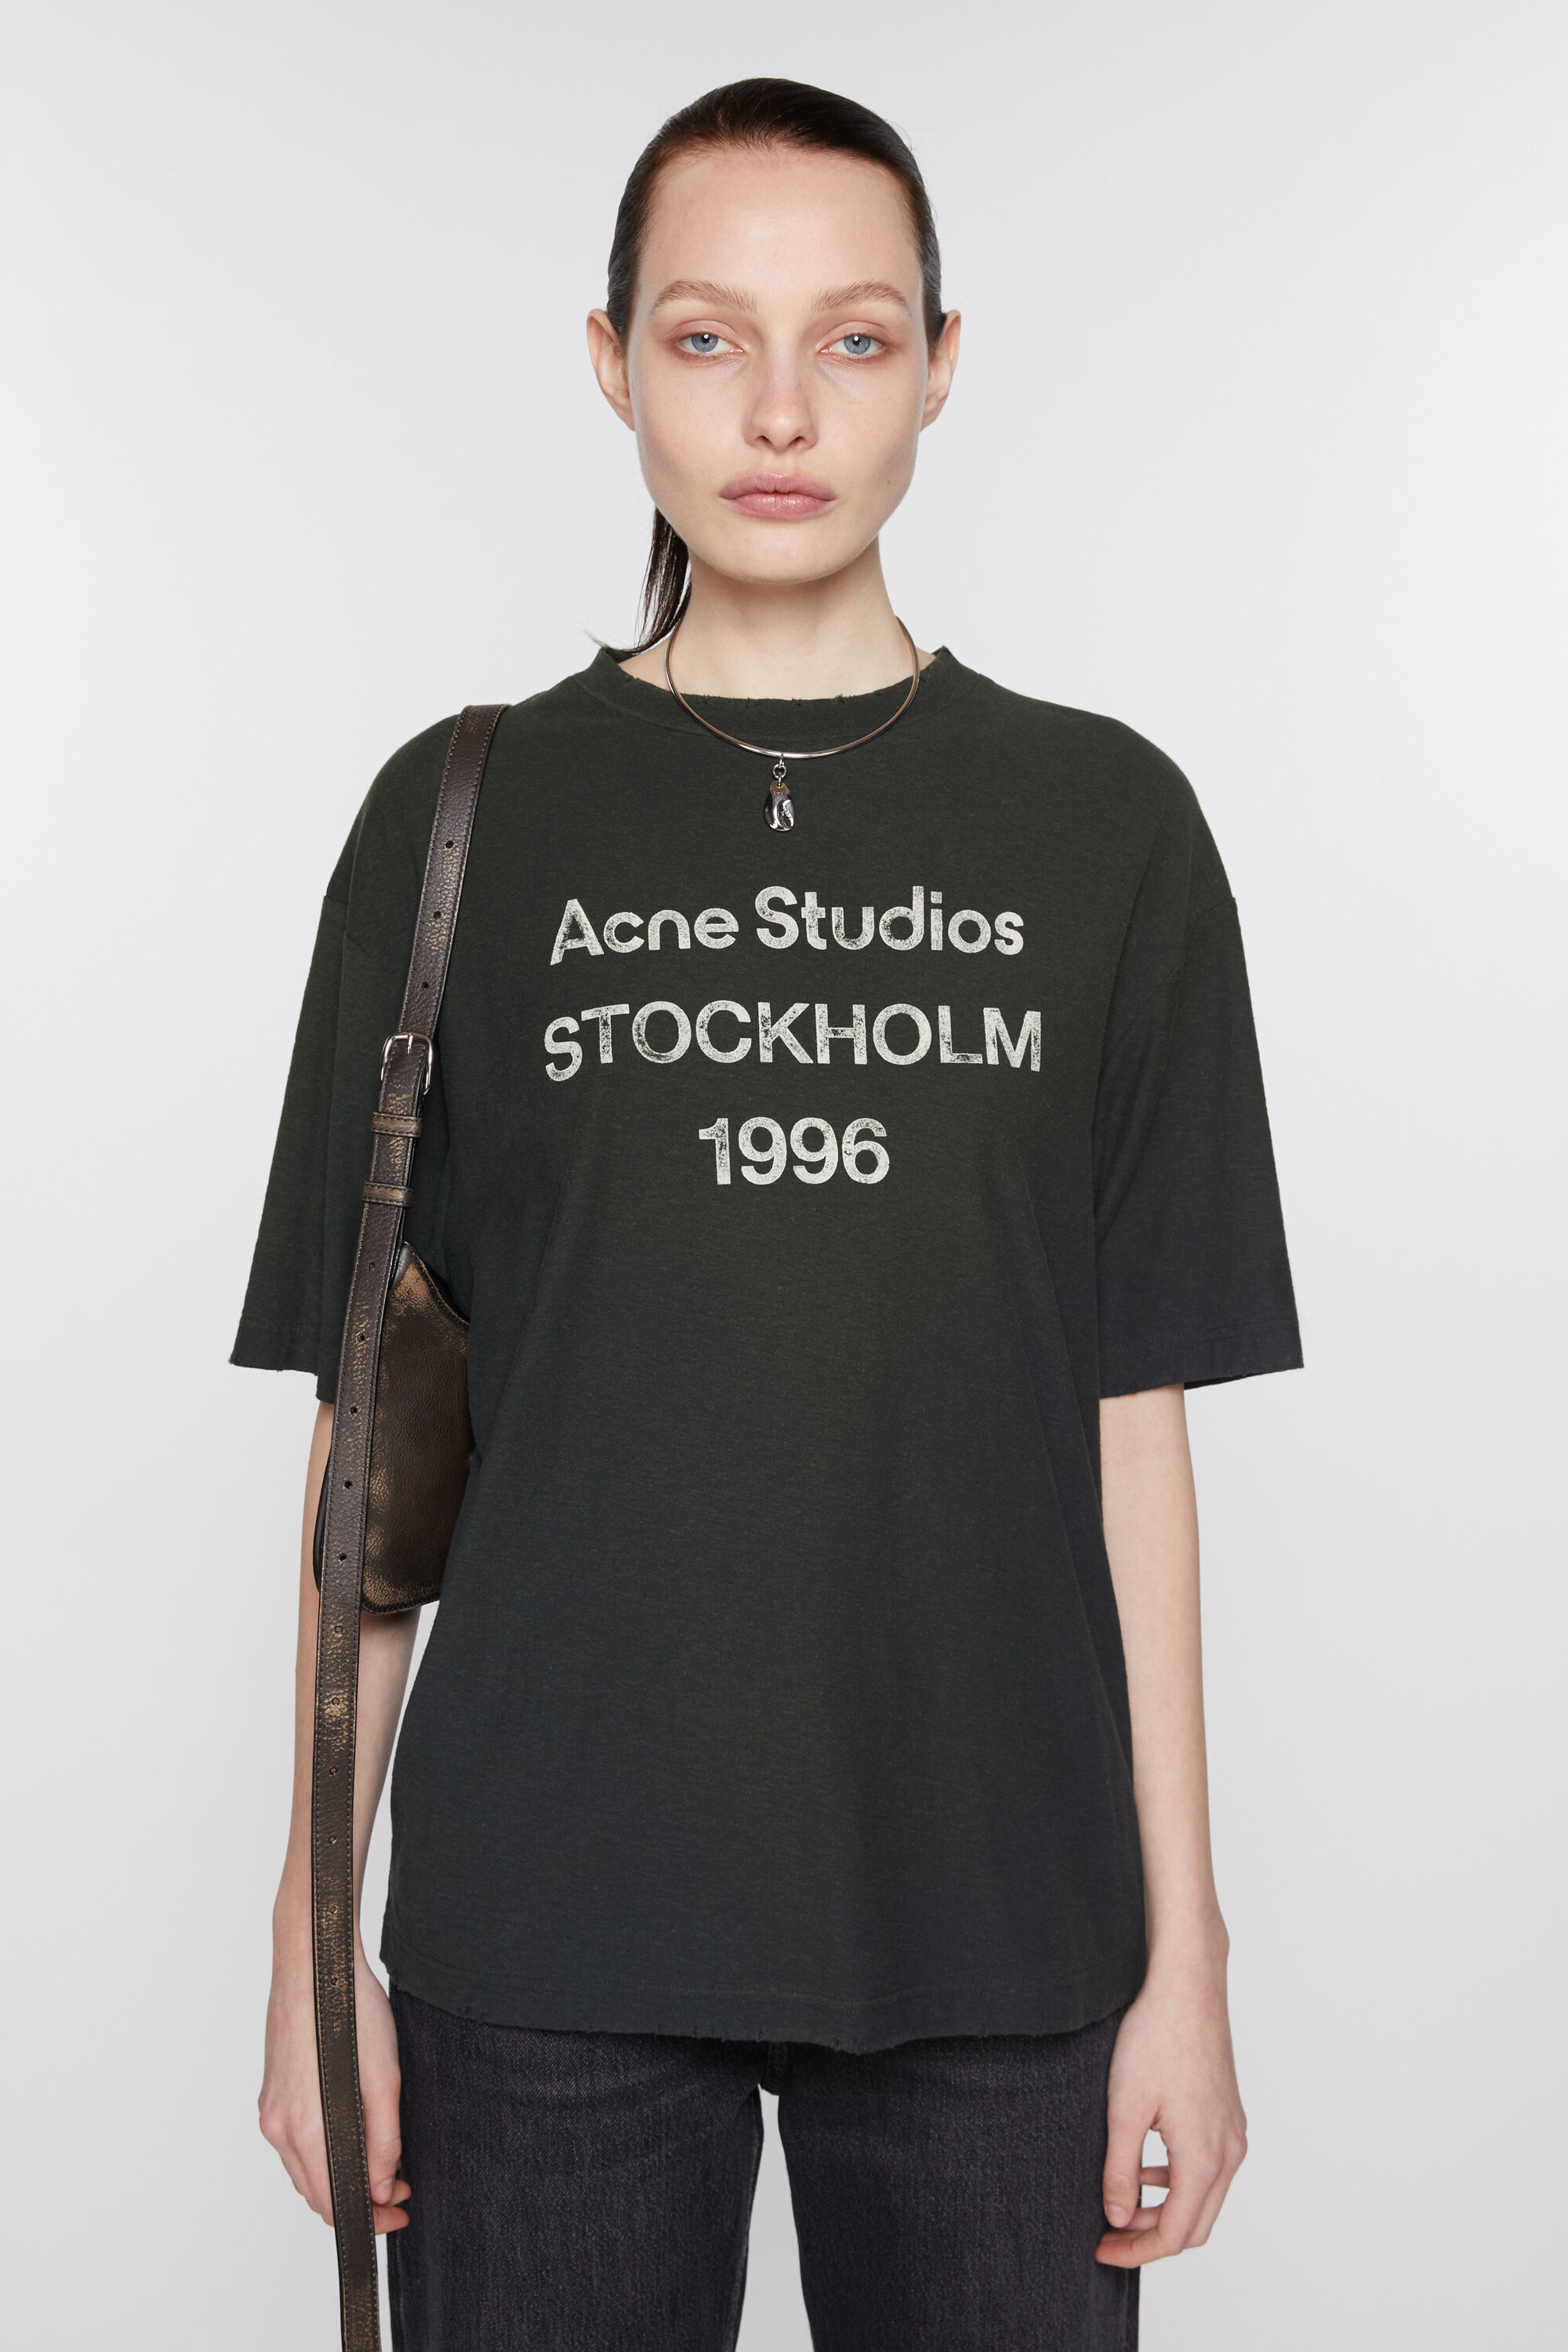 Acne Studios – Women's T-shirts